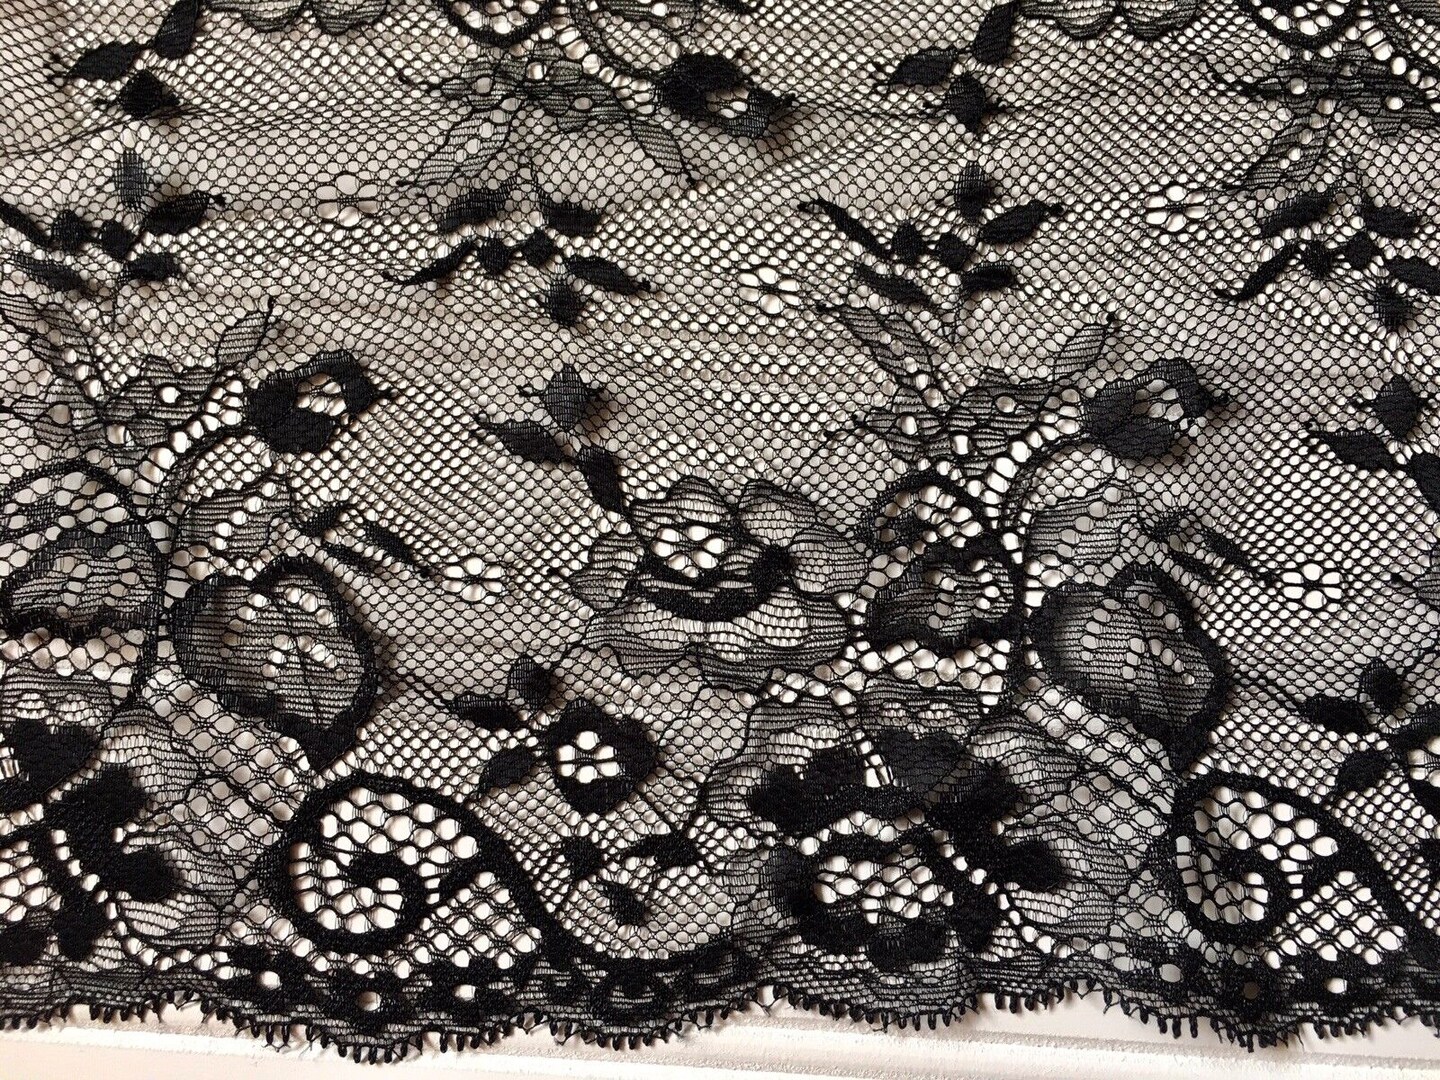 Kitcheniva Stretch Black Embroidered Border Lace Trim Sewing